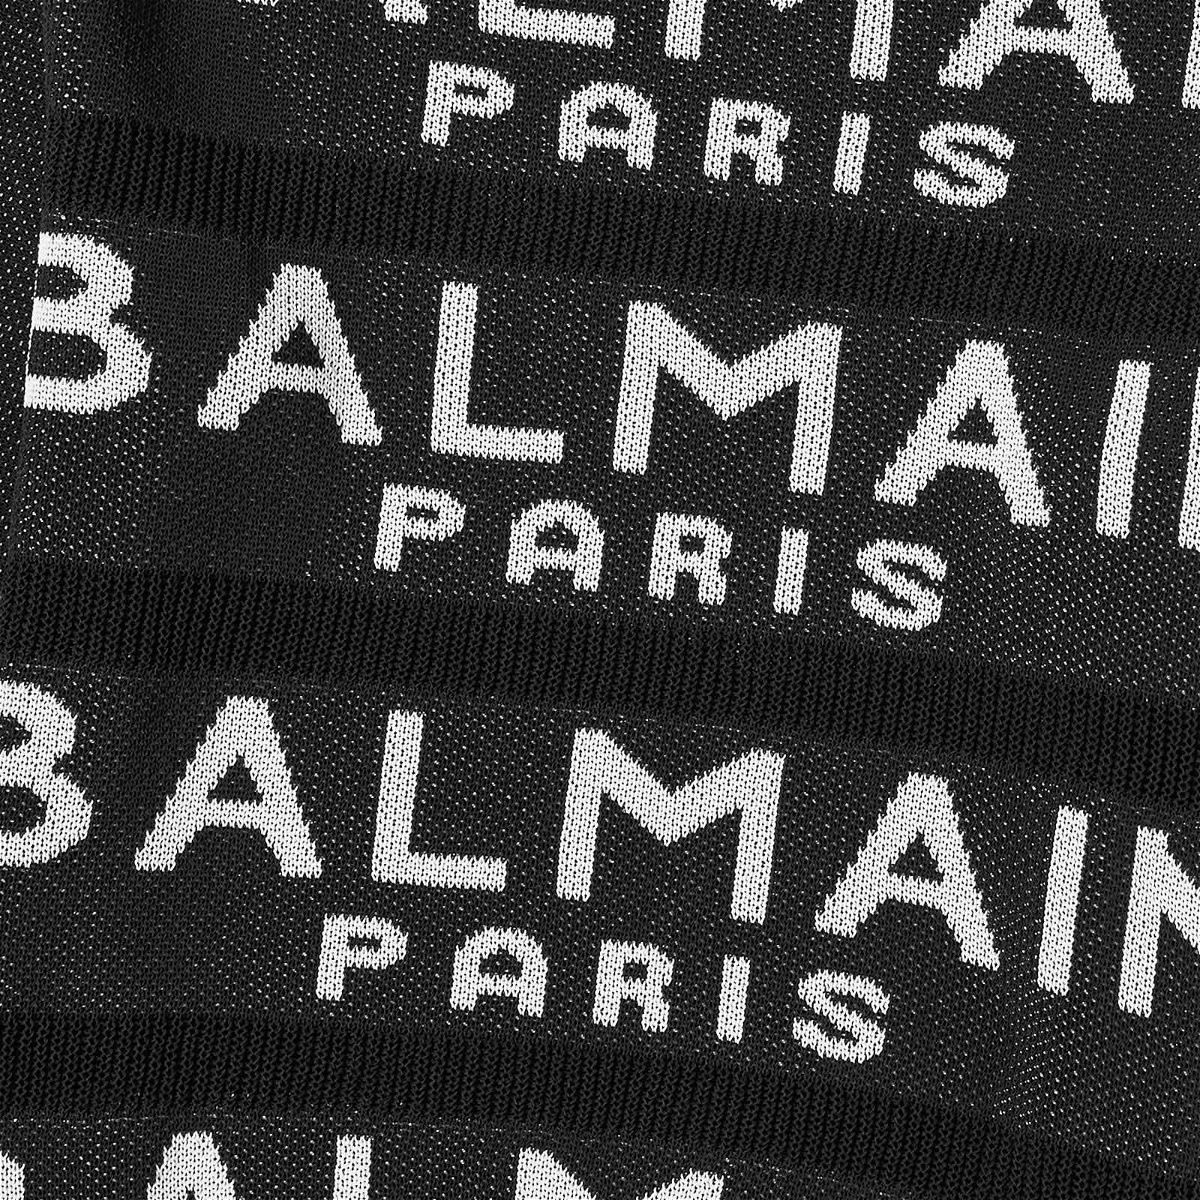 Balmain Men's All Over Logo Crew Knit in Black/White Balmain